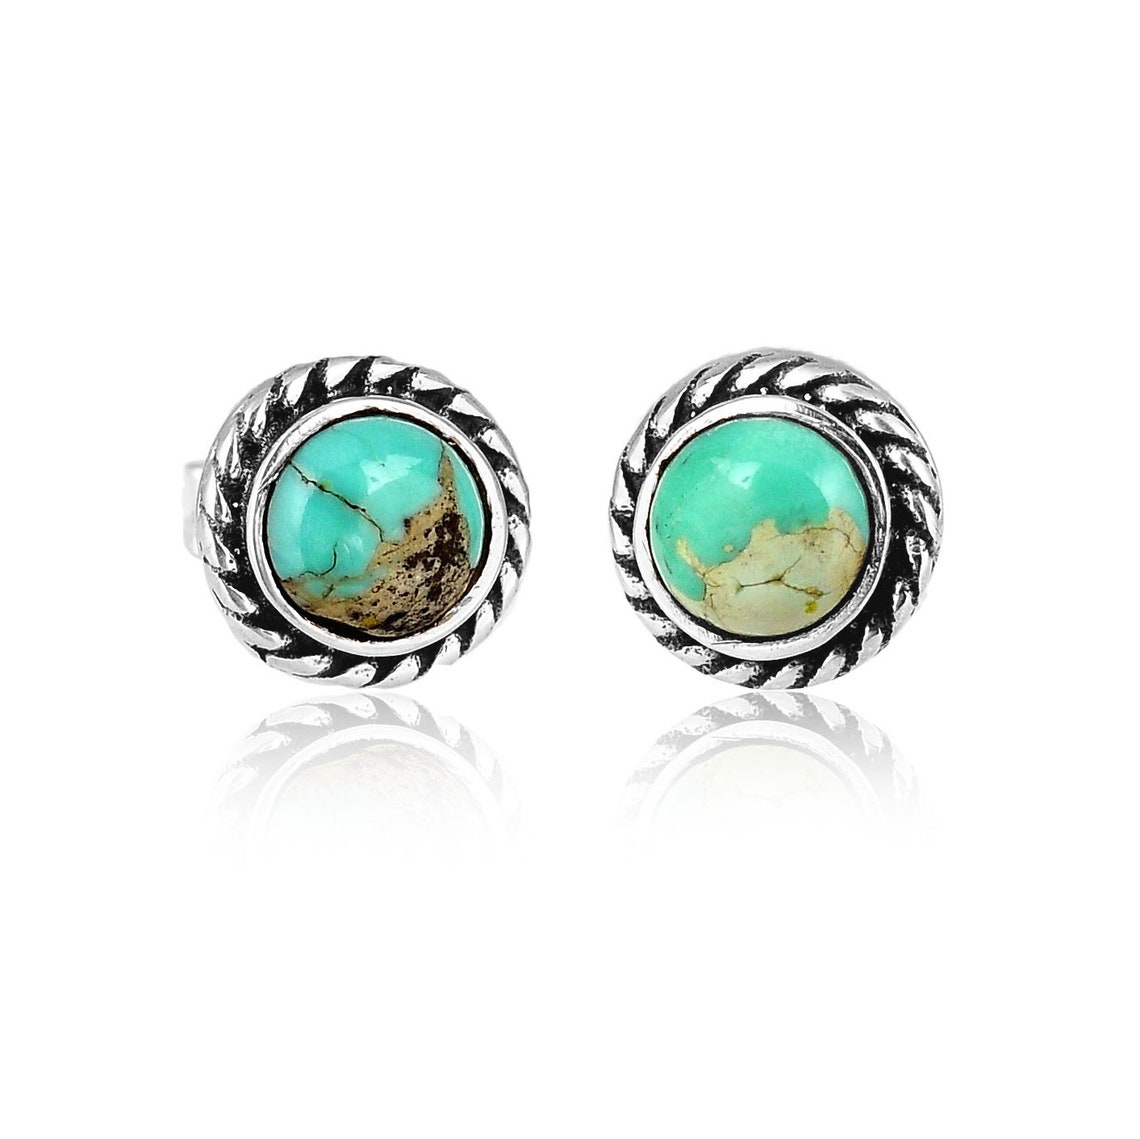 Turquoise Earrings Sterling Silver Cartilage Stud Earrings | Etsy